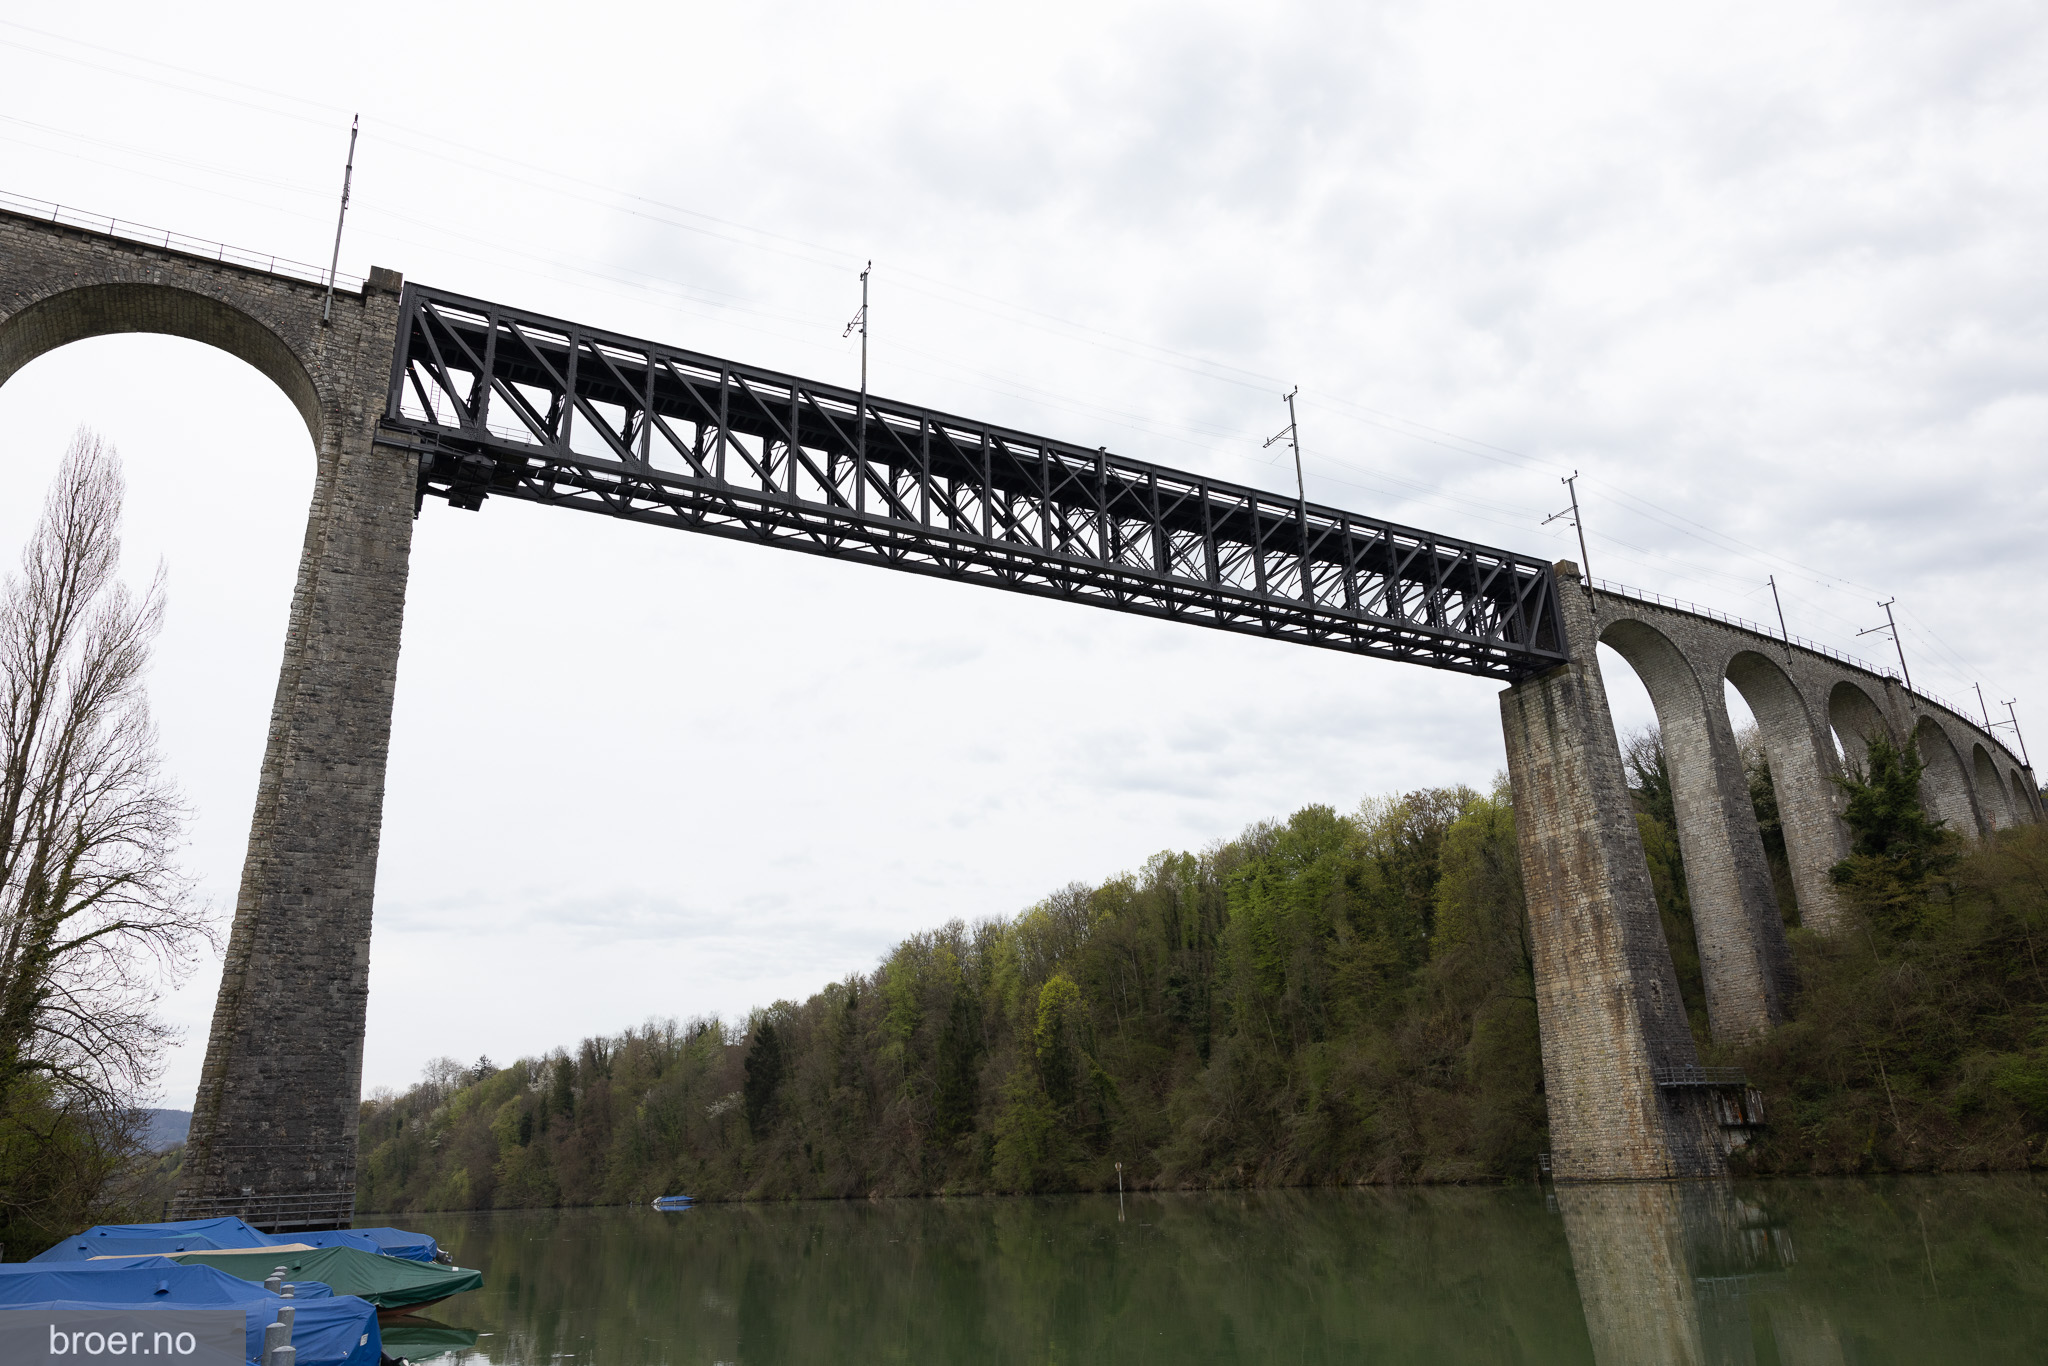 picture of Eglisau railway bridge